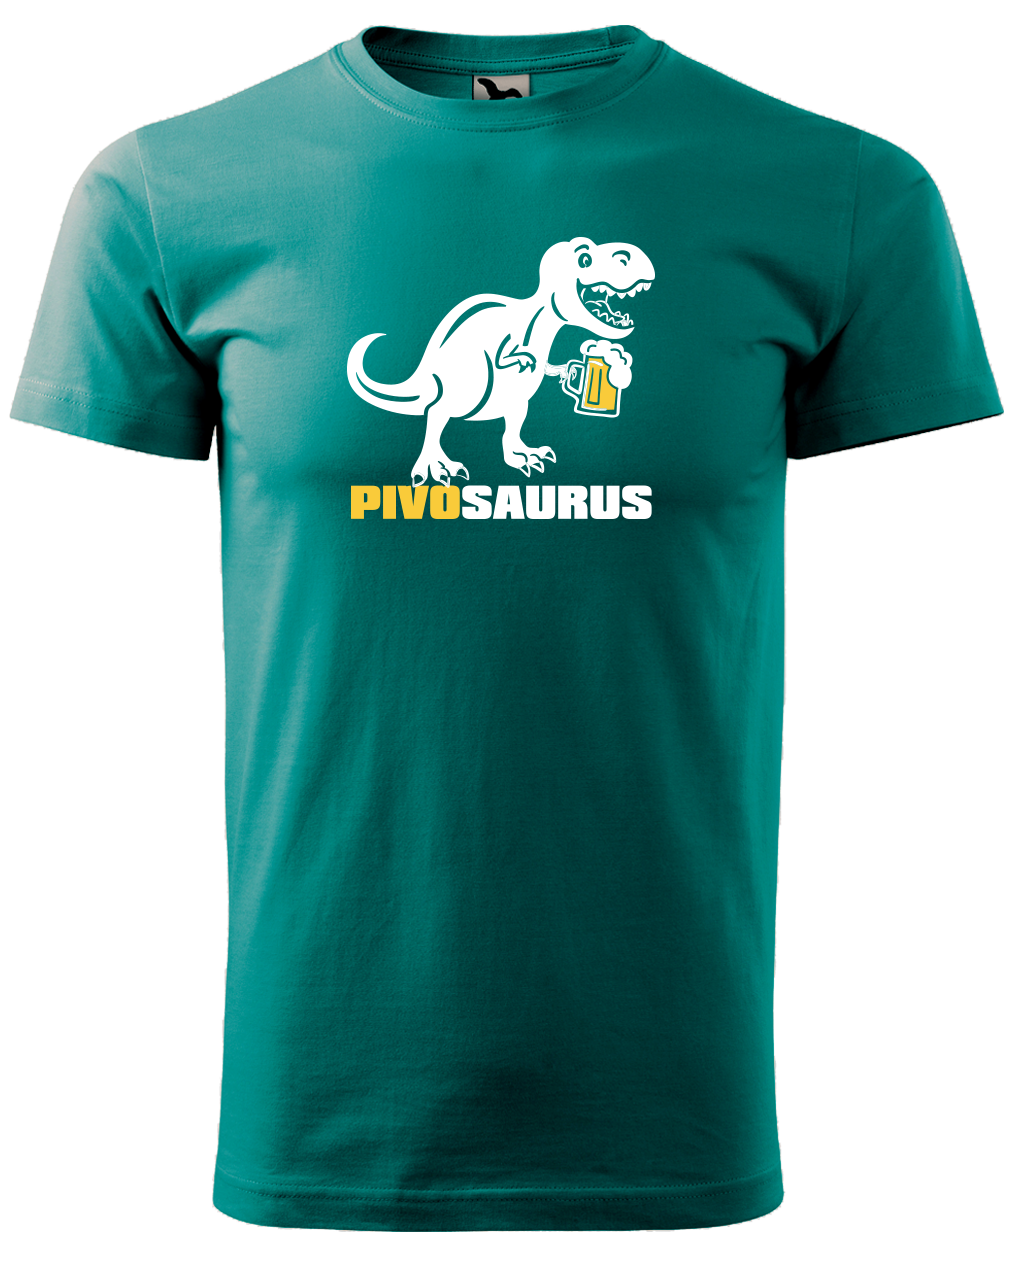 Vtipné tričko - Pivosaurus Velikost: L, Barva: Emerald (19)